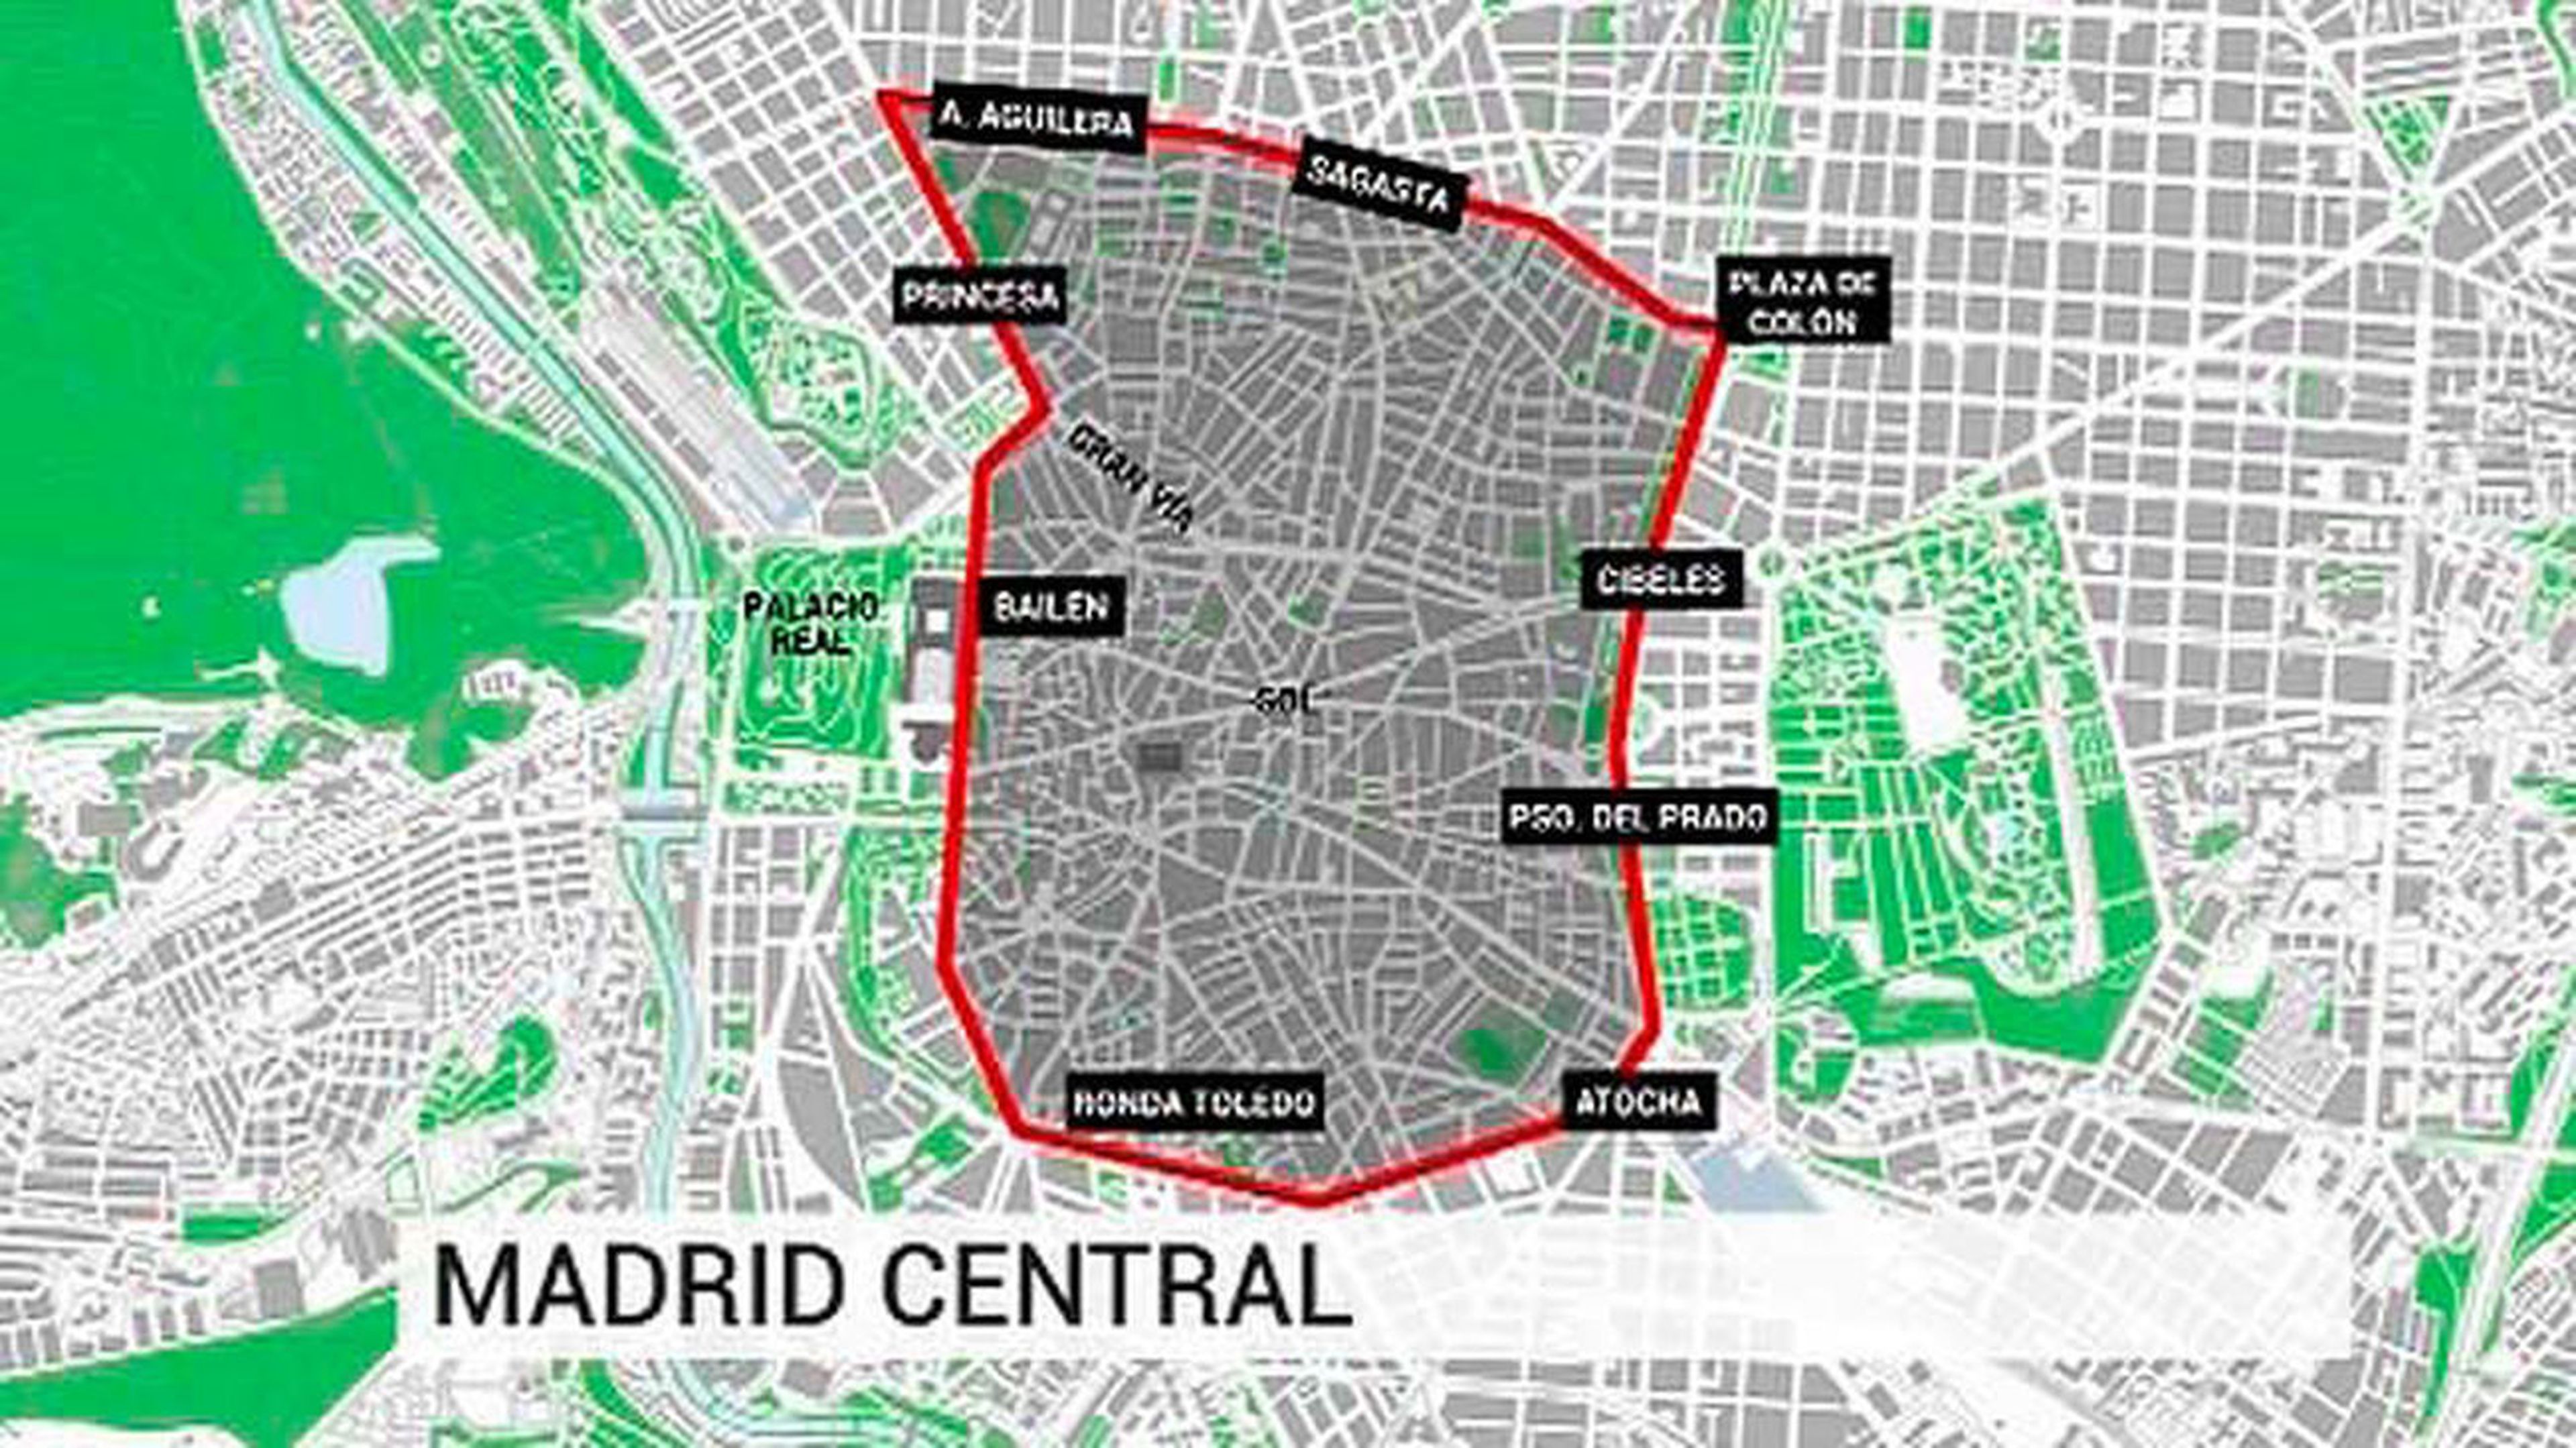 Madrid central mapa